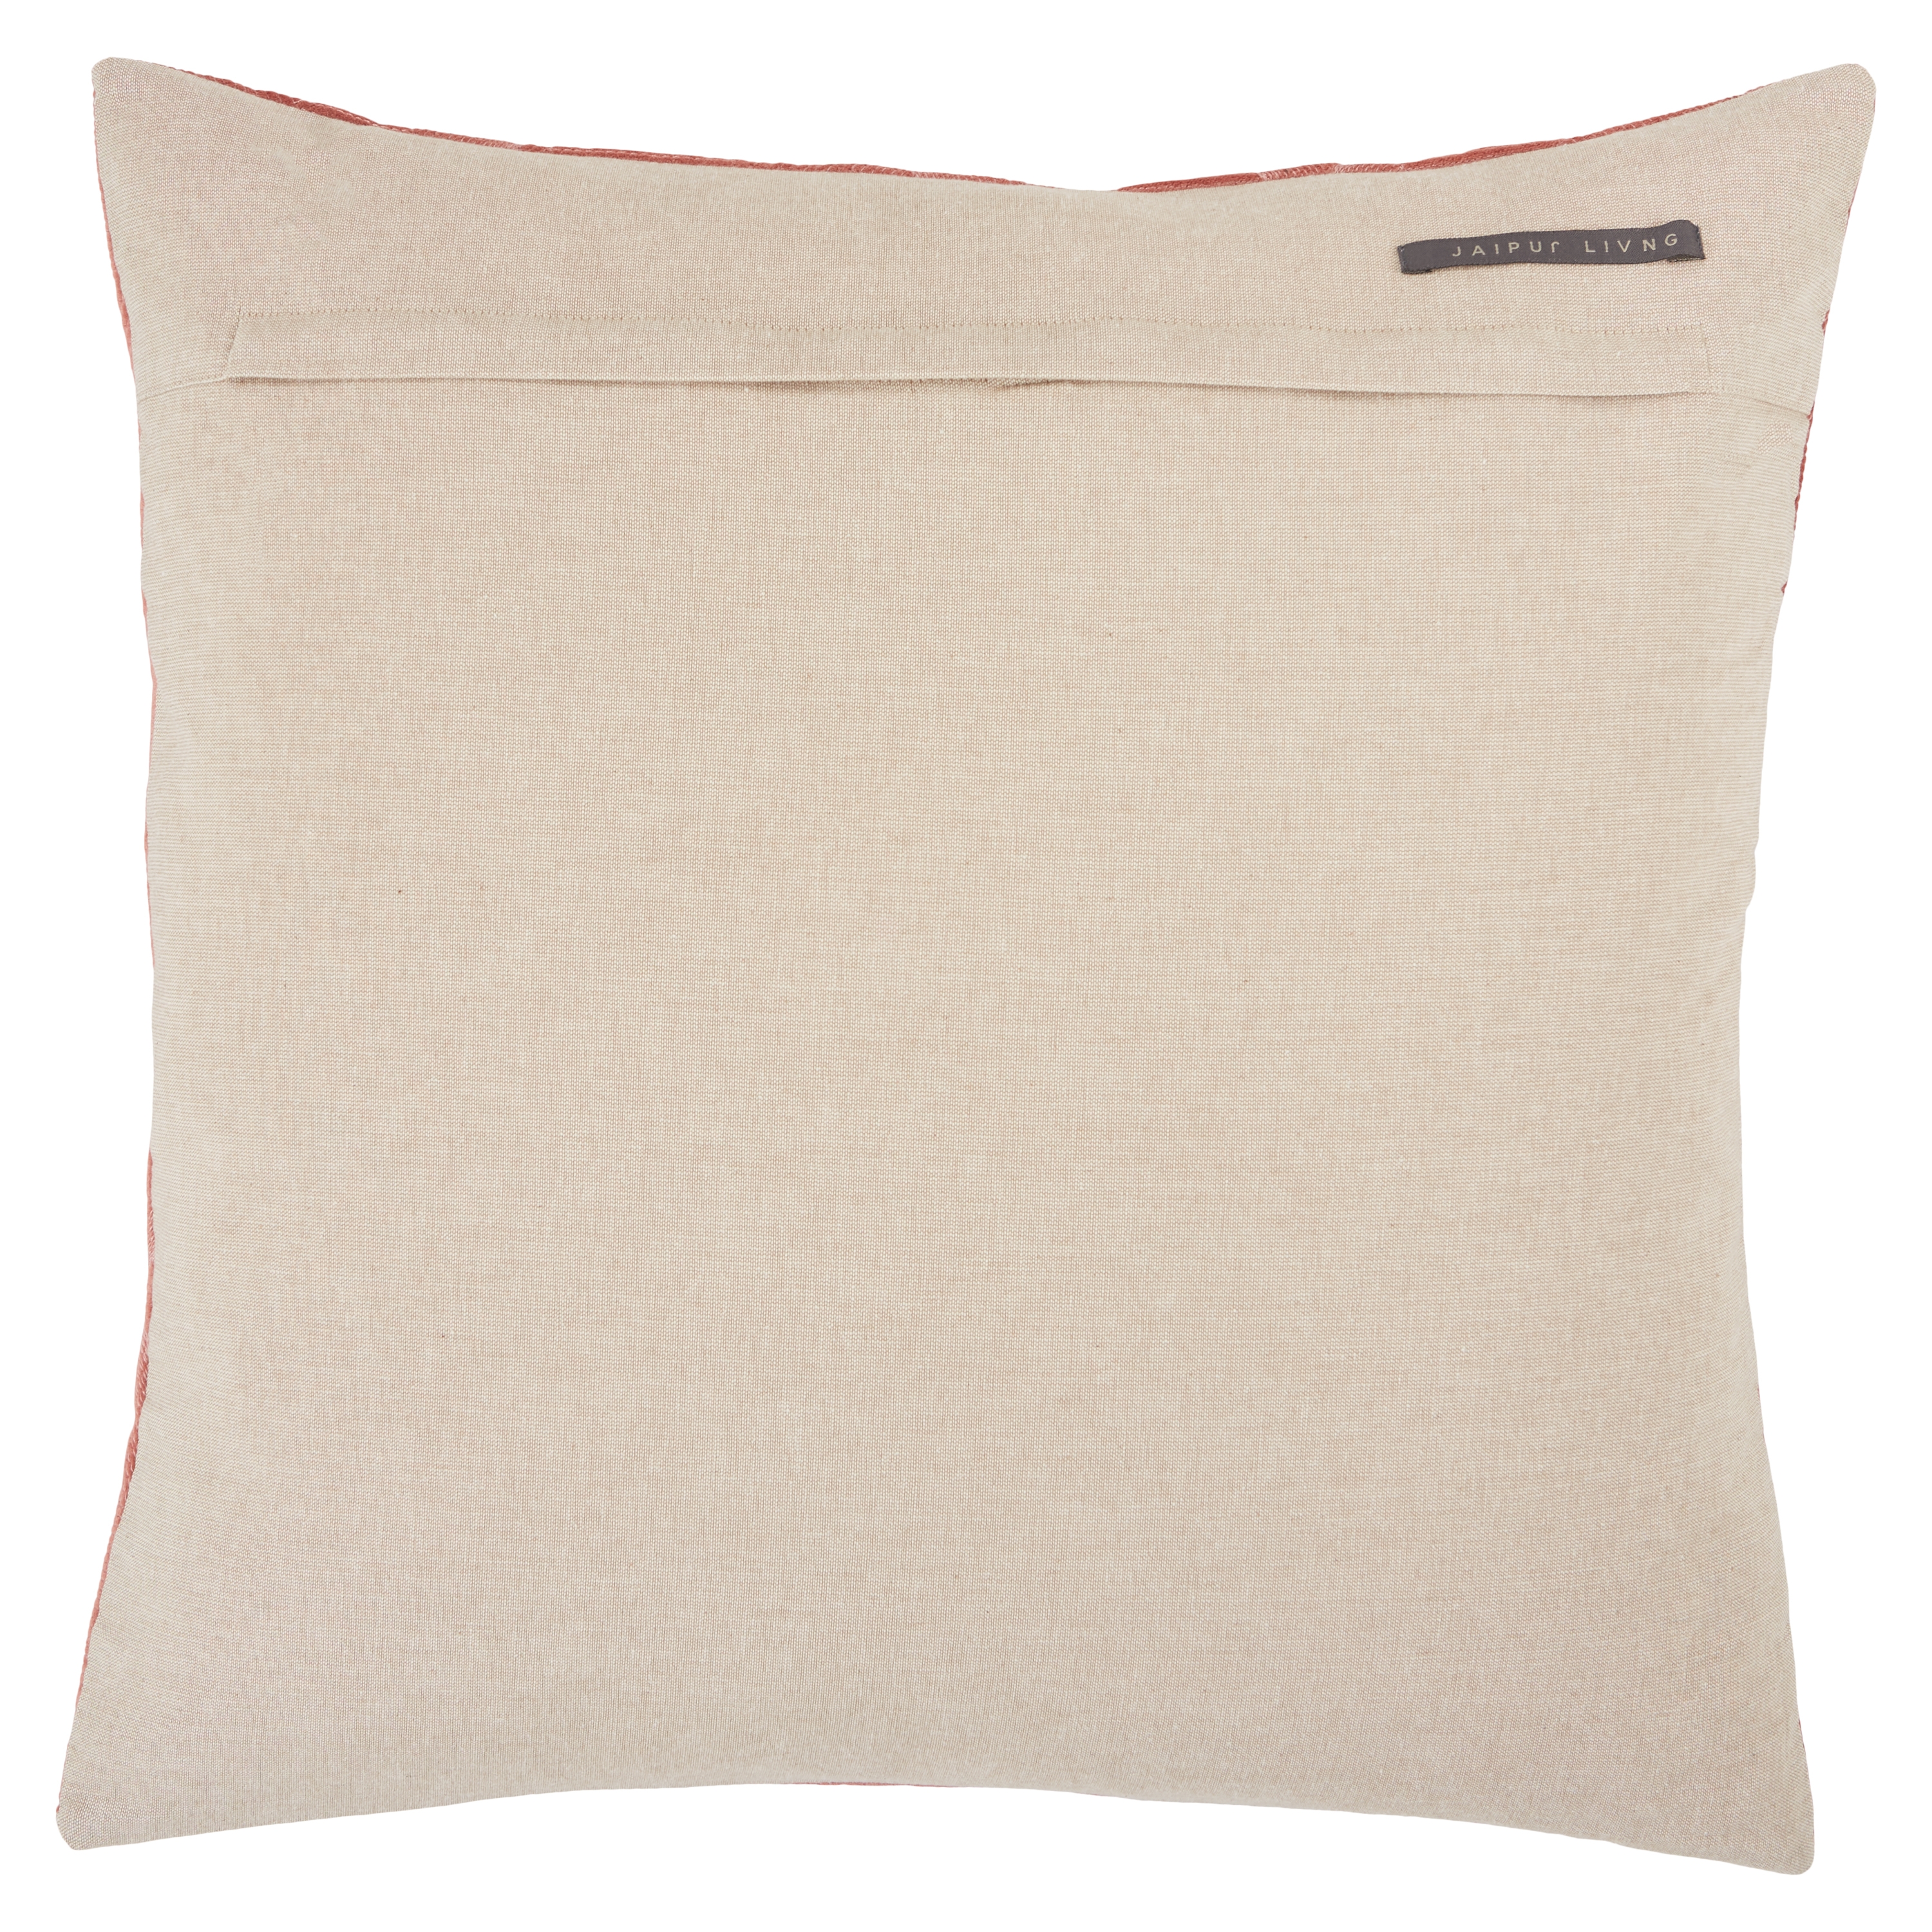 Design (US) Dark Pink 22"X22" Pillow - Image 1